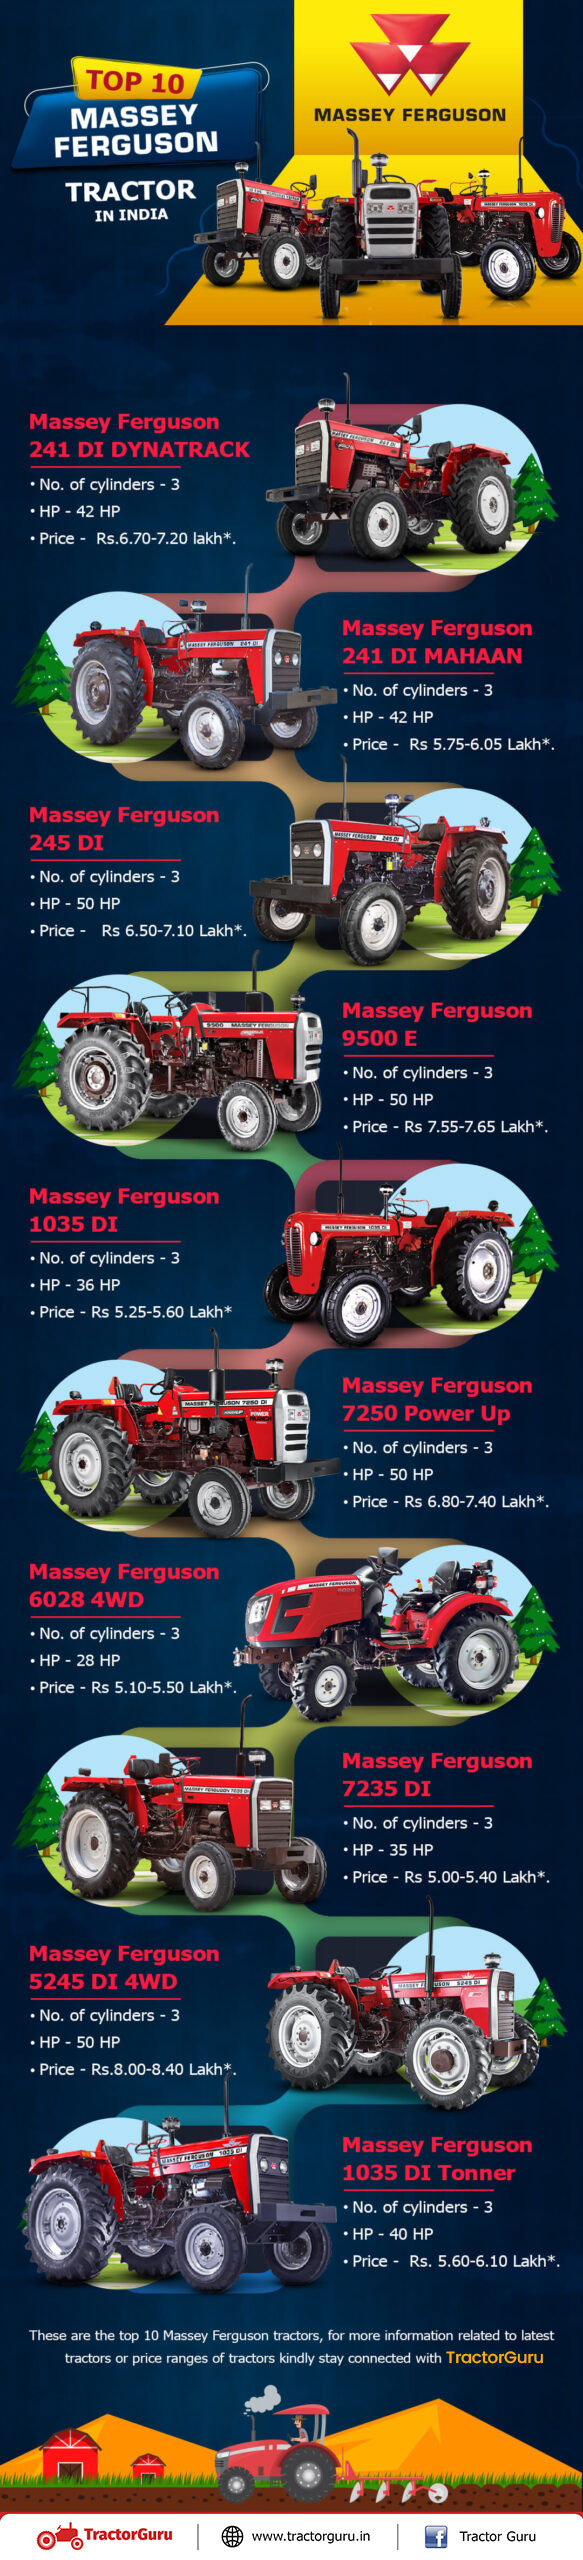 Top 10 Massey Ferguson Tractor Infographic